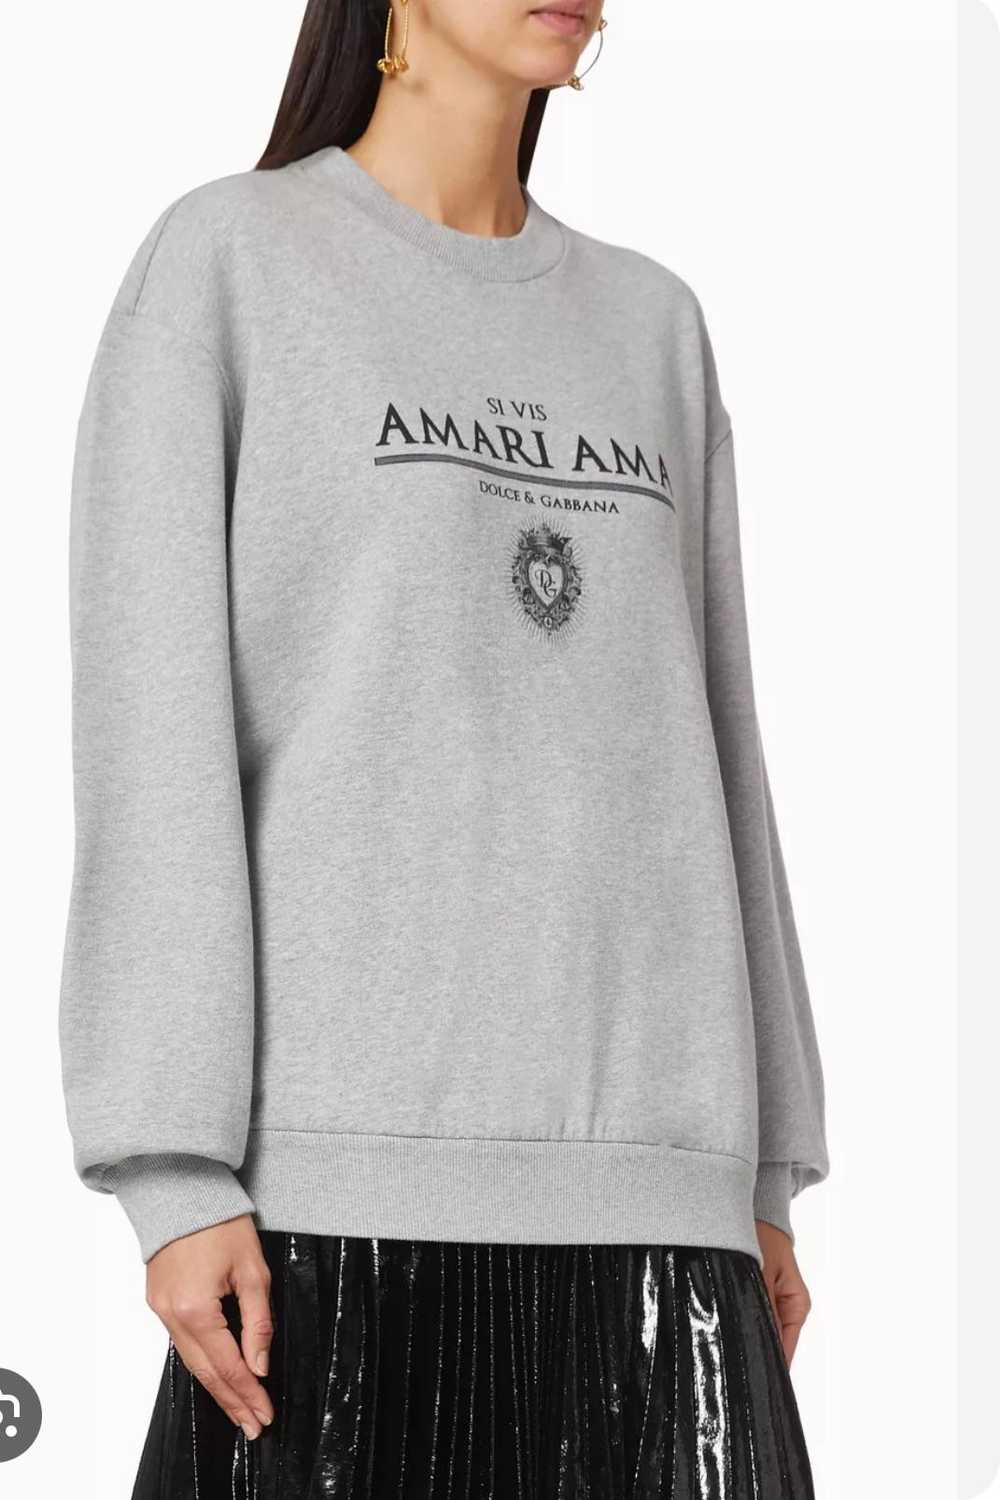 Dolce & Gabbana Amari Ama Cotton Jersey Sweatshirt - image 2